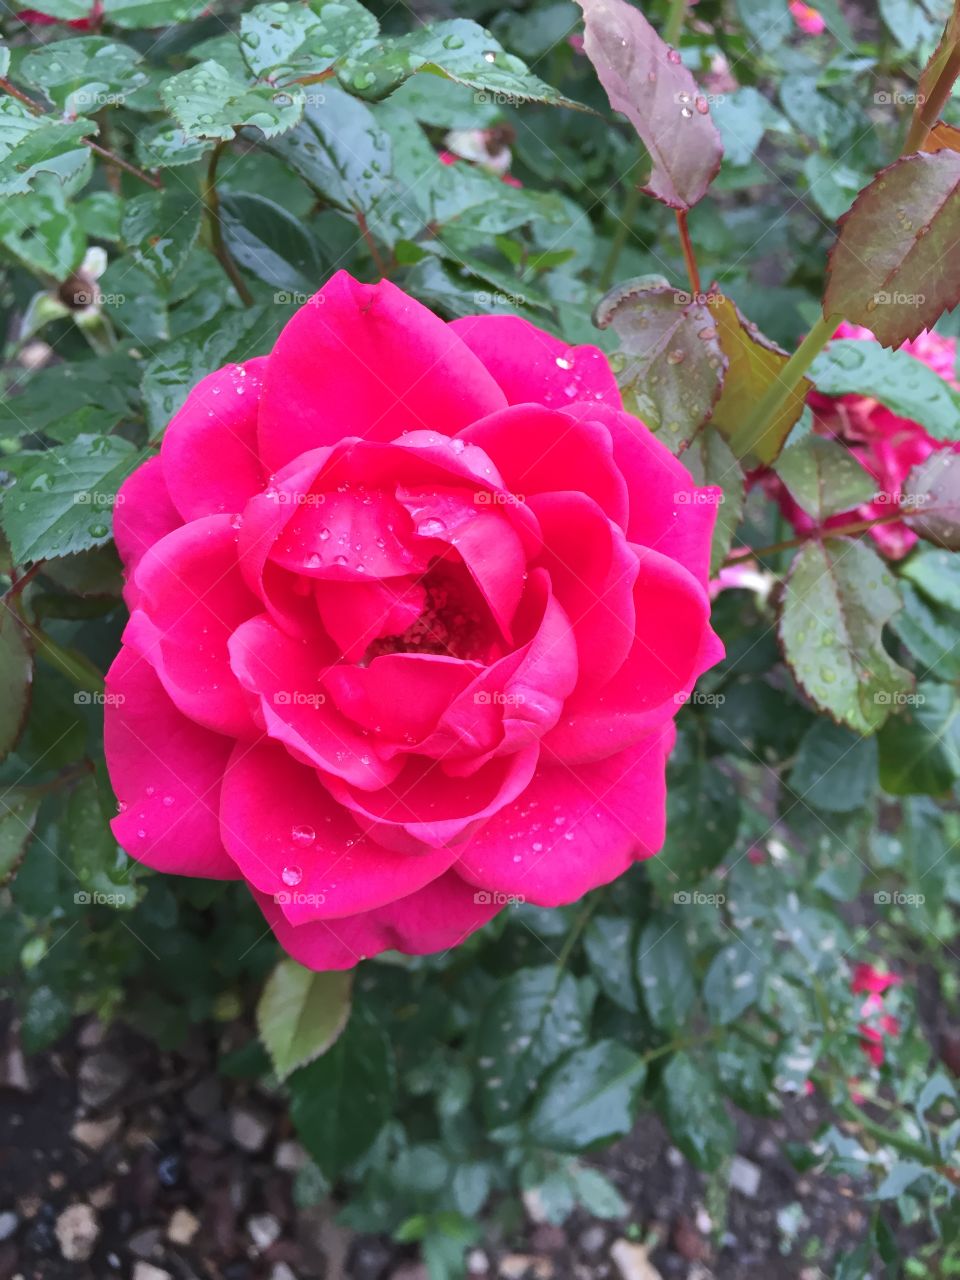 Dew kissed rose